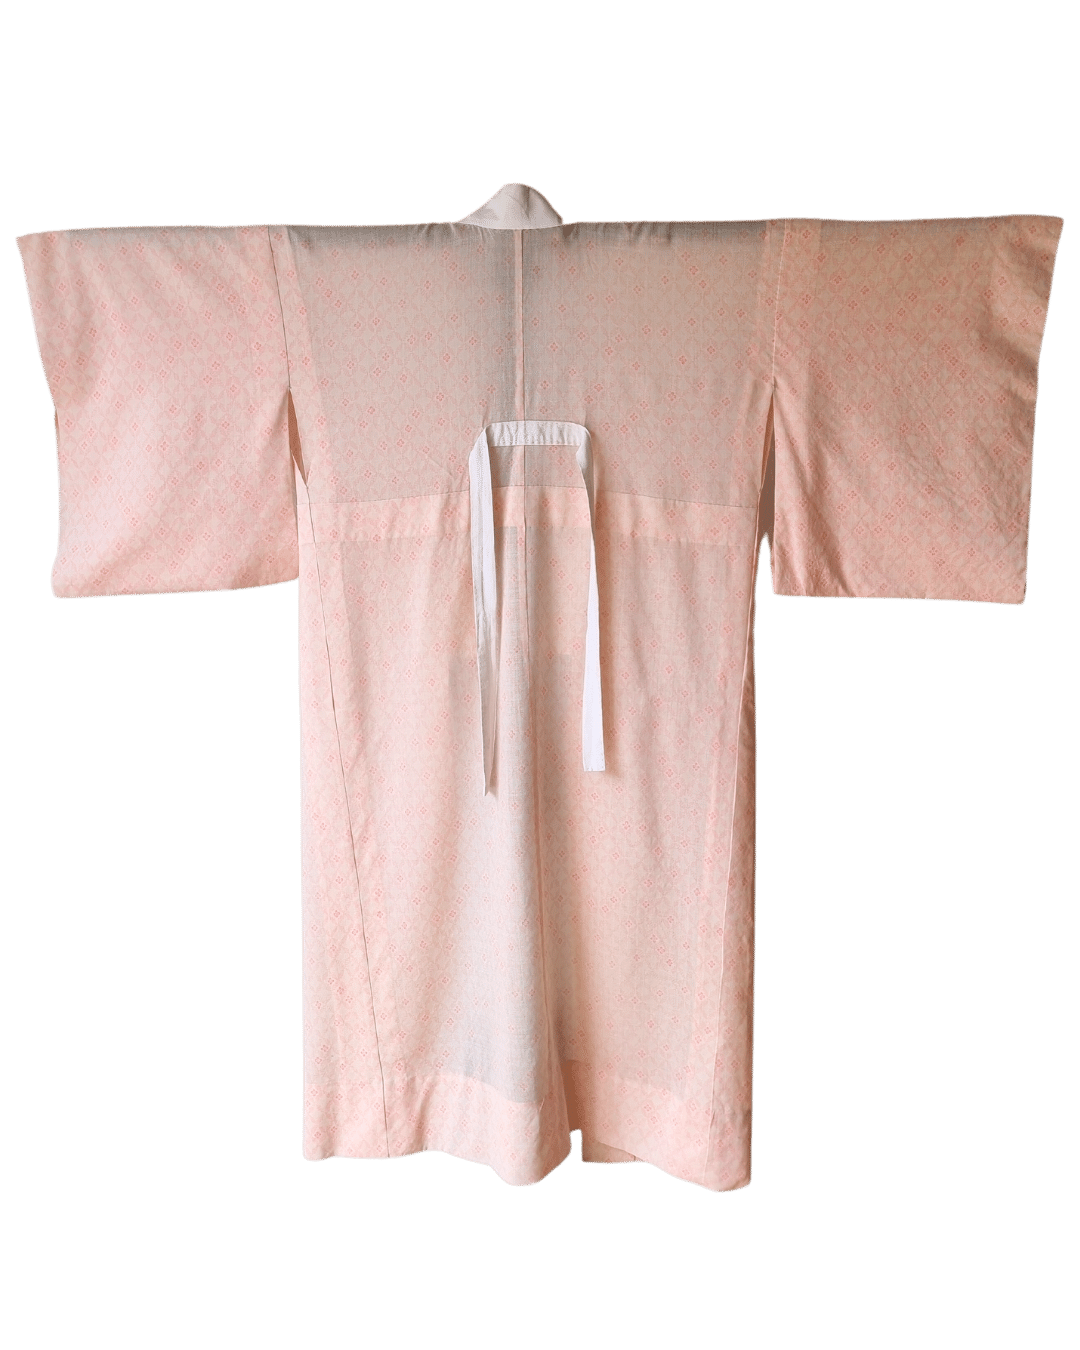 Vintage Juban Unterkimono creme und rosa